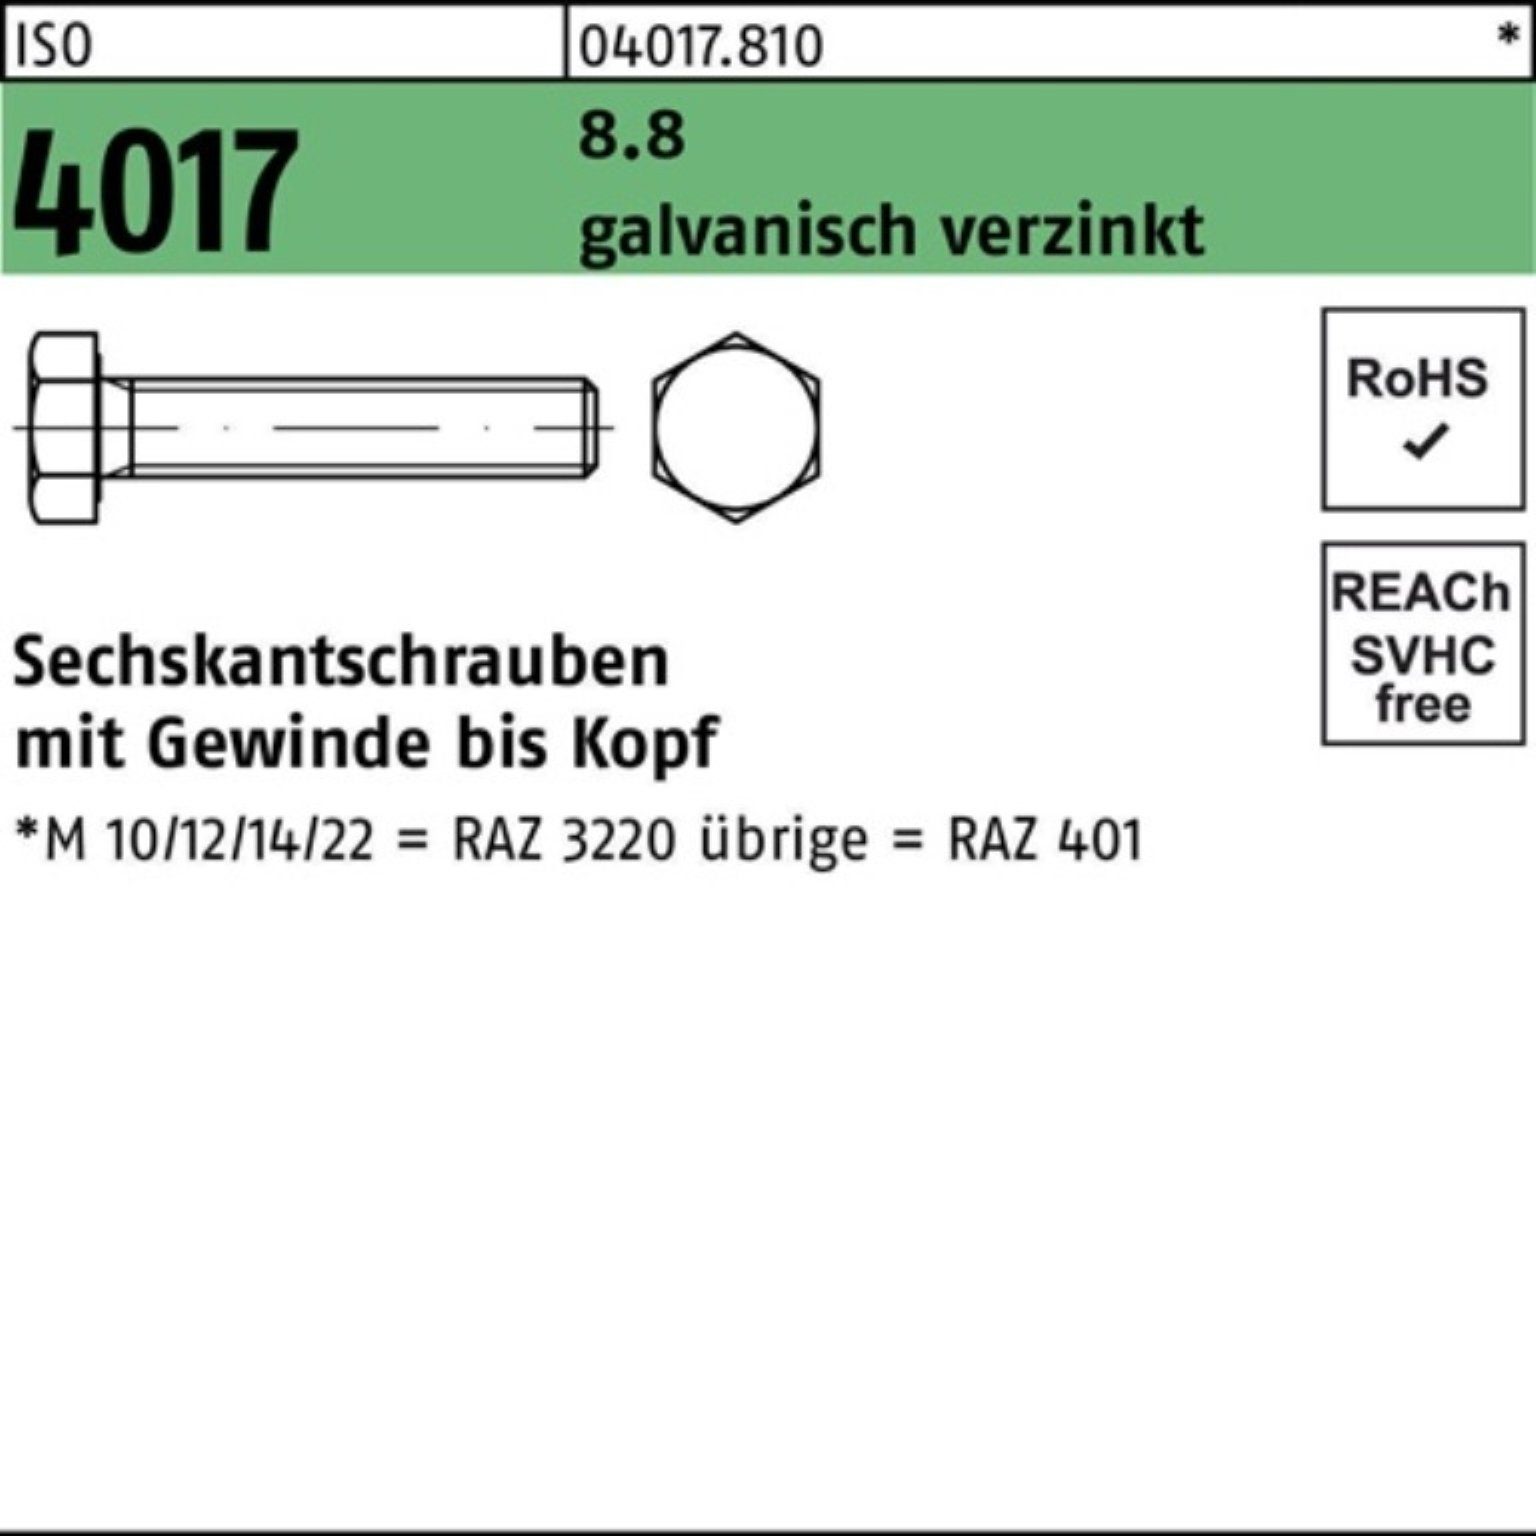 Sechskantschraube Bufab ISO galv.verz. 1 Pack VG St 100er Sechskantschraube 4017 8.8 M36x 140